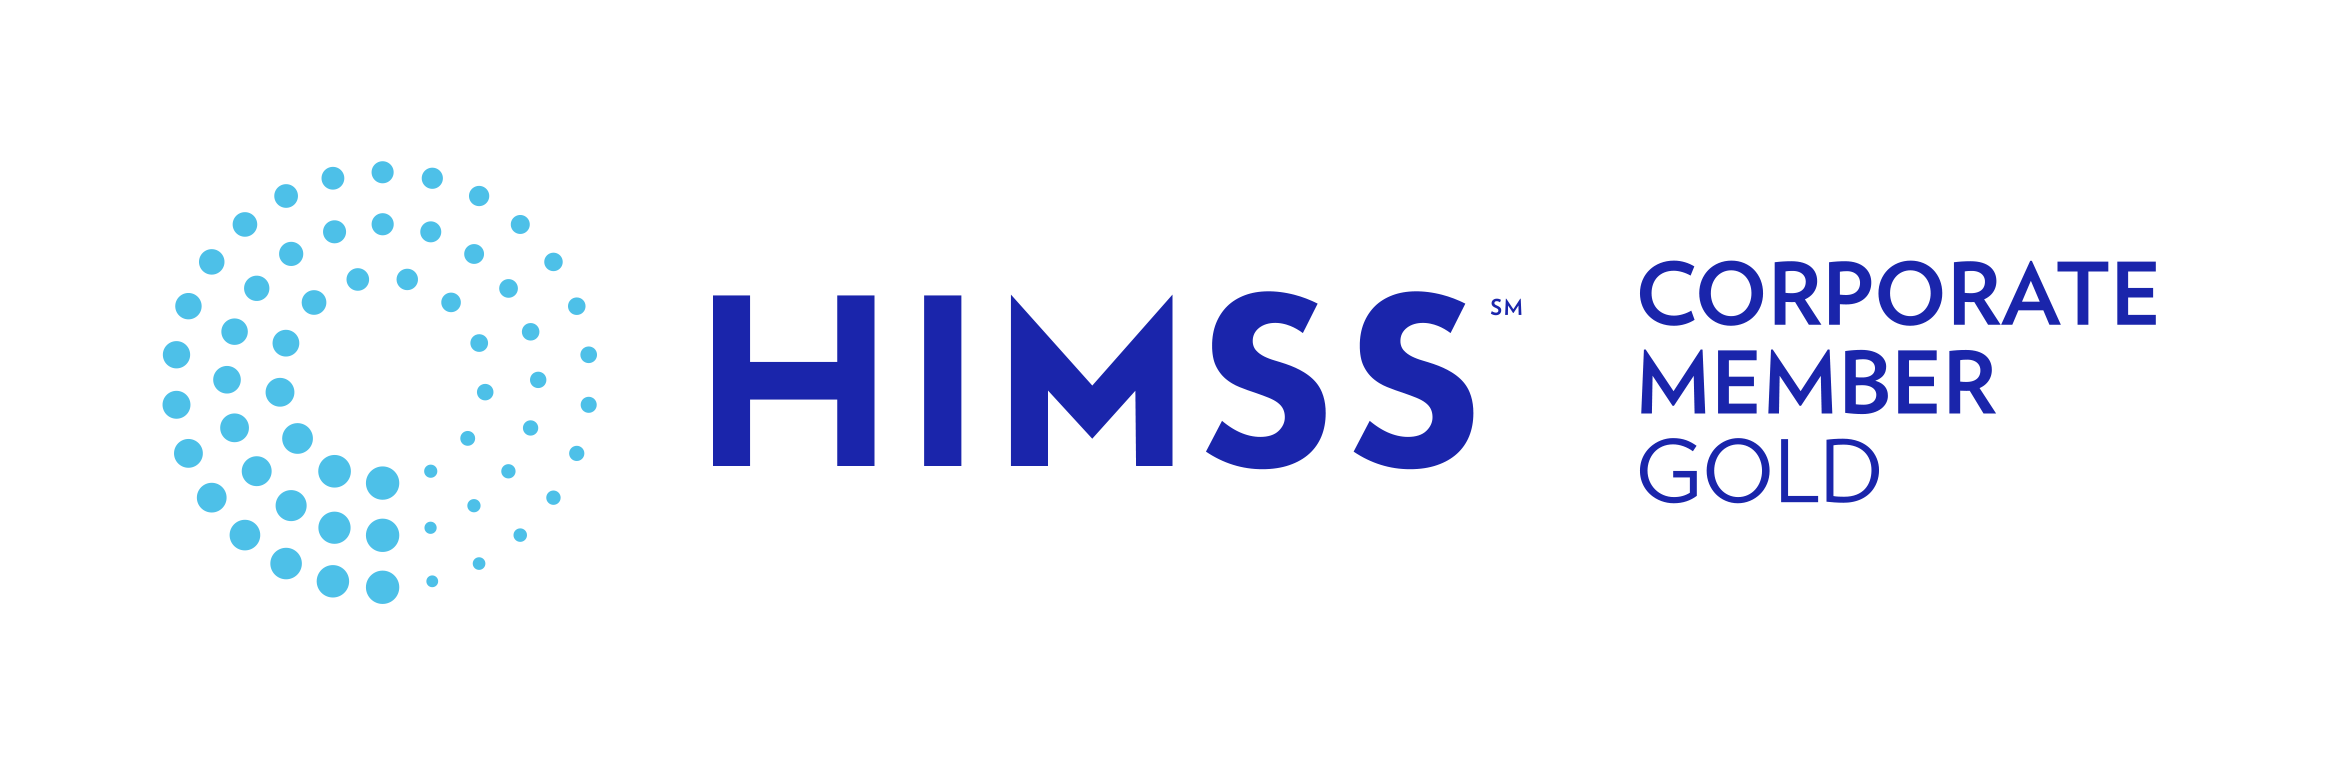 HIMSS Corporate Membership